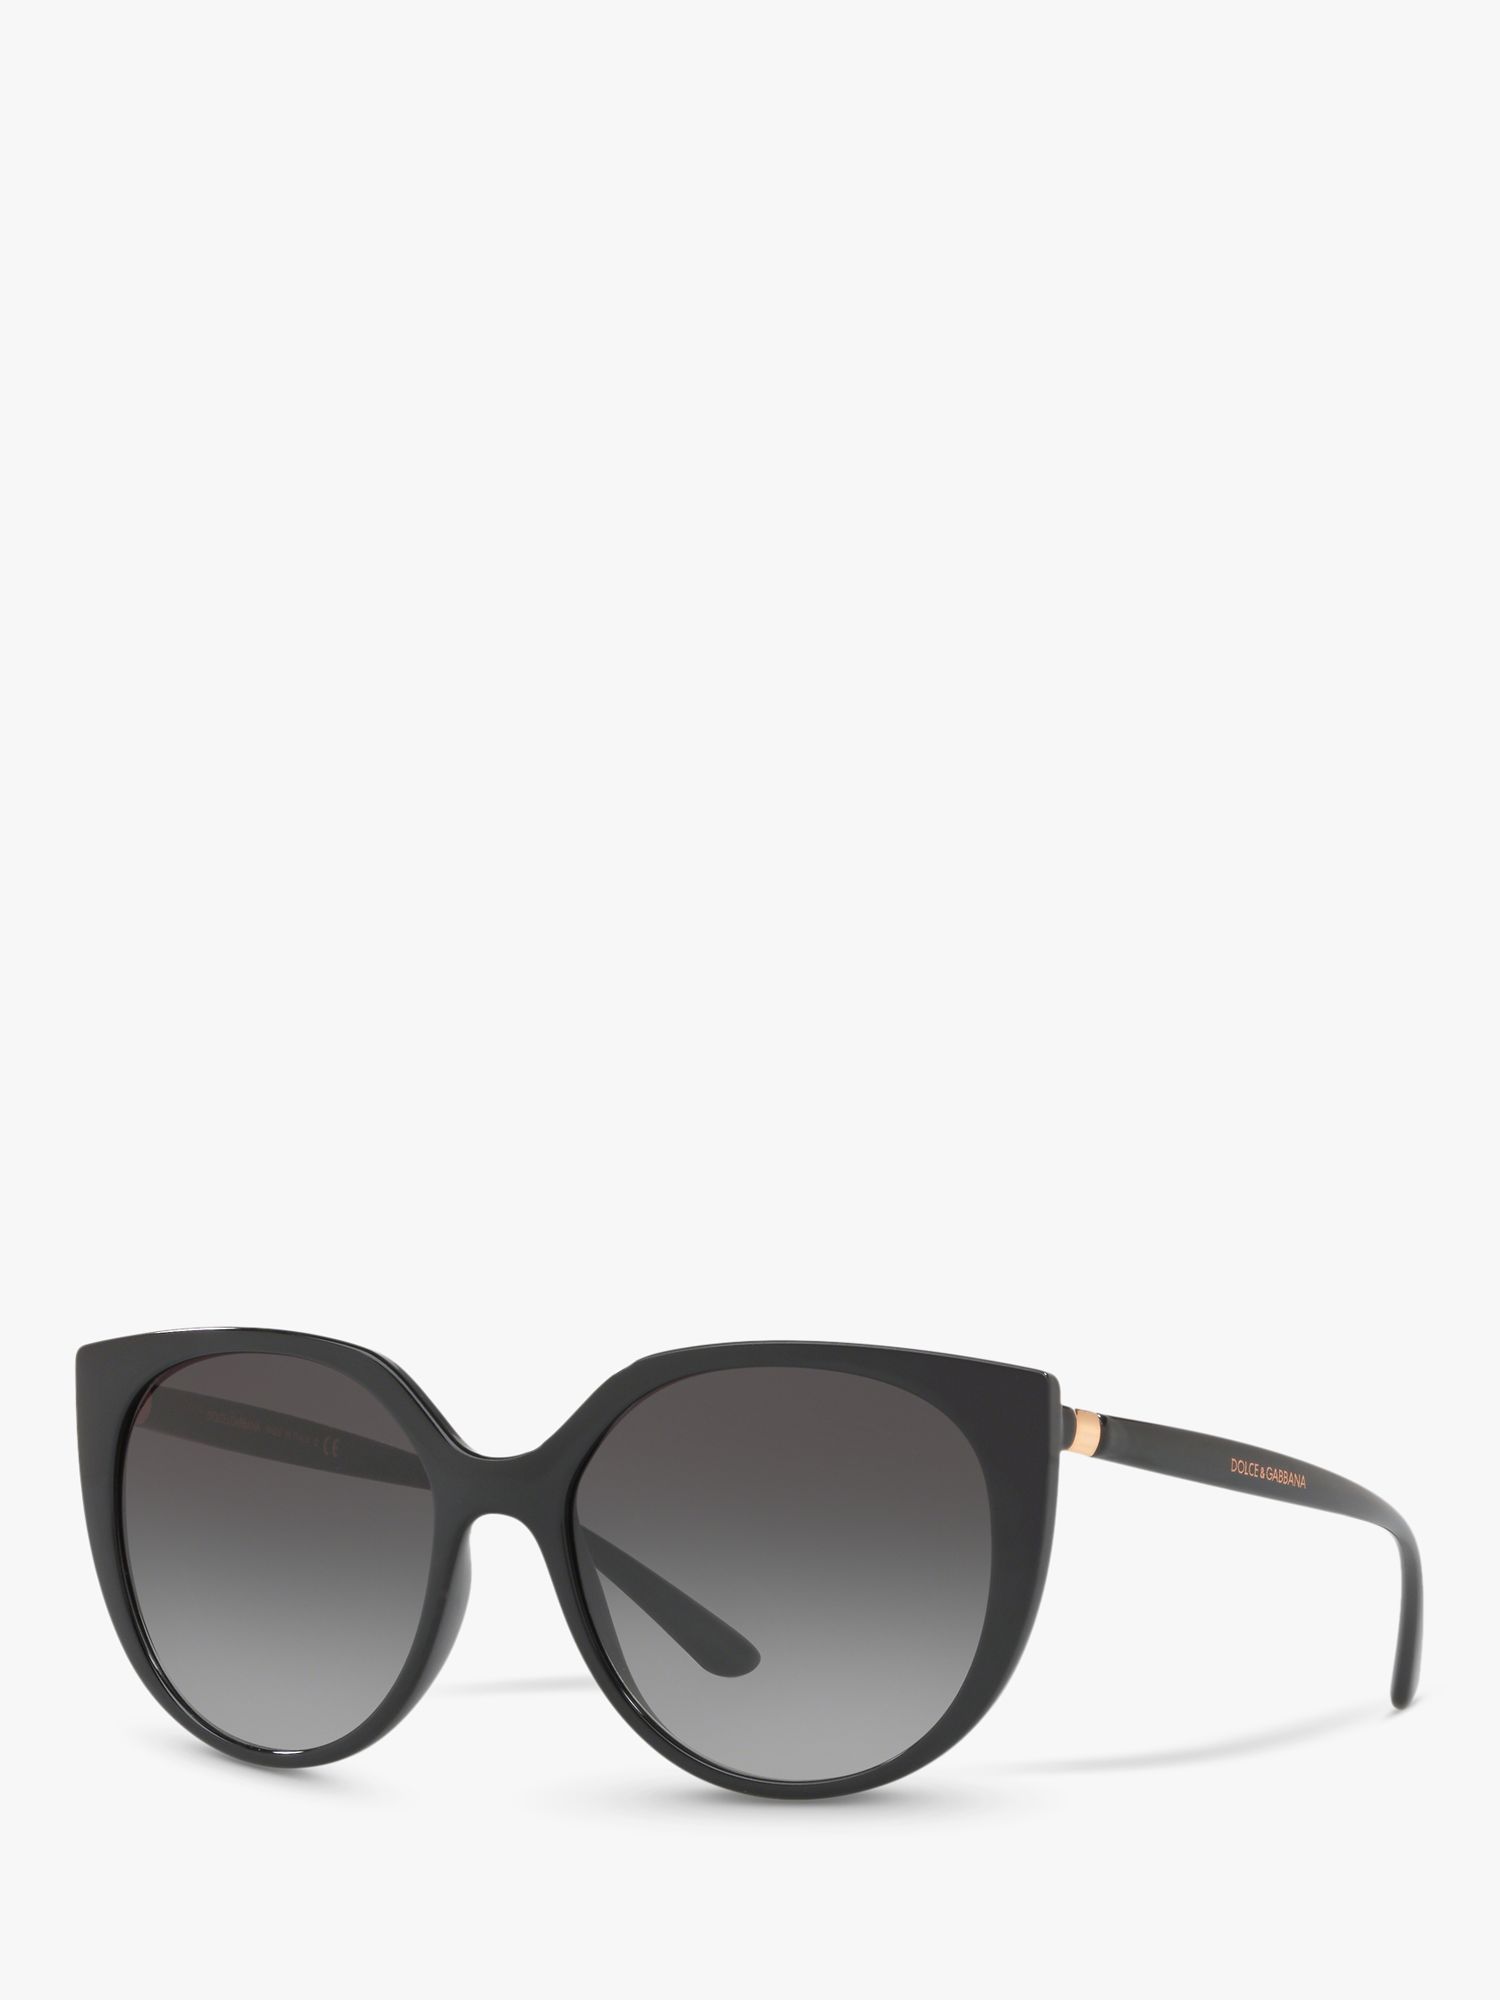 Dolce & Gabbana DG6119 Women's Oval Sunglasses, Matte Black/Grey ...